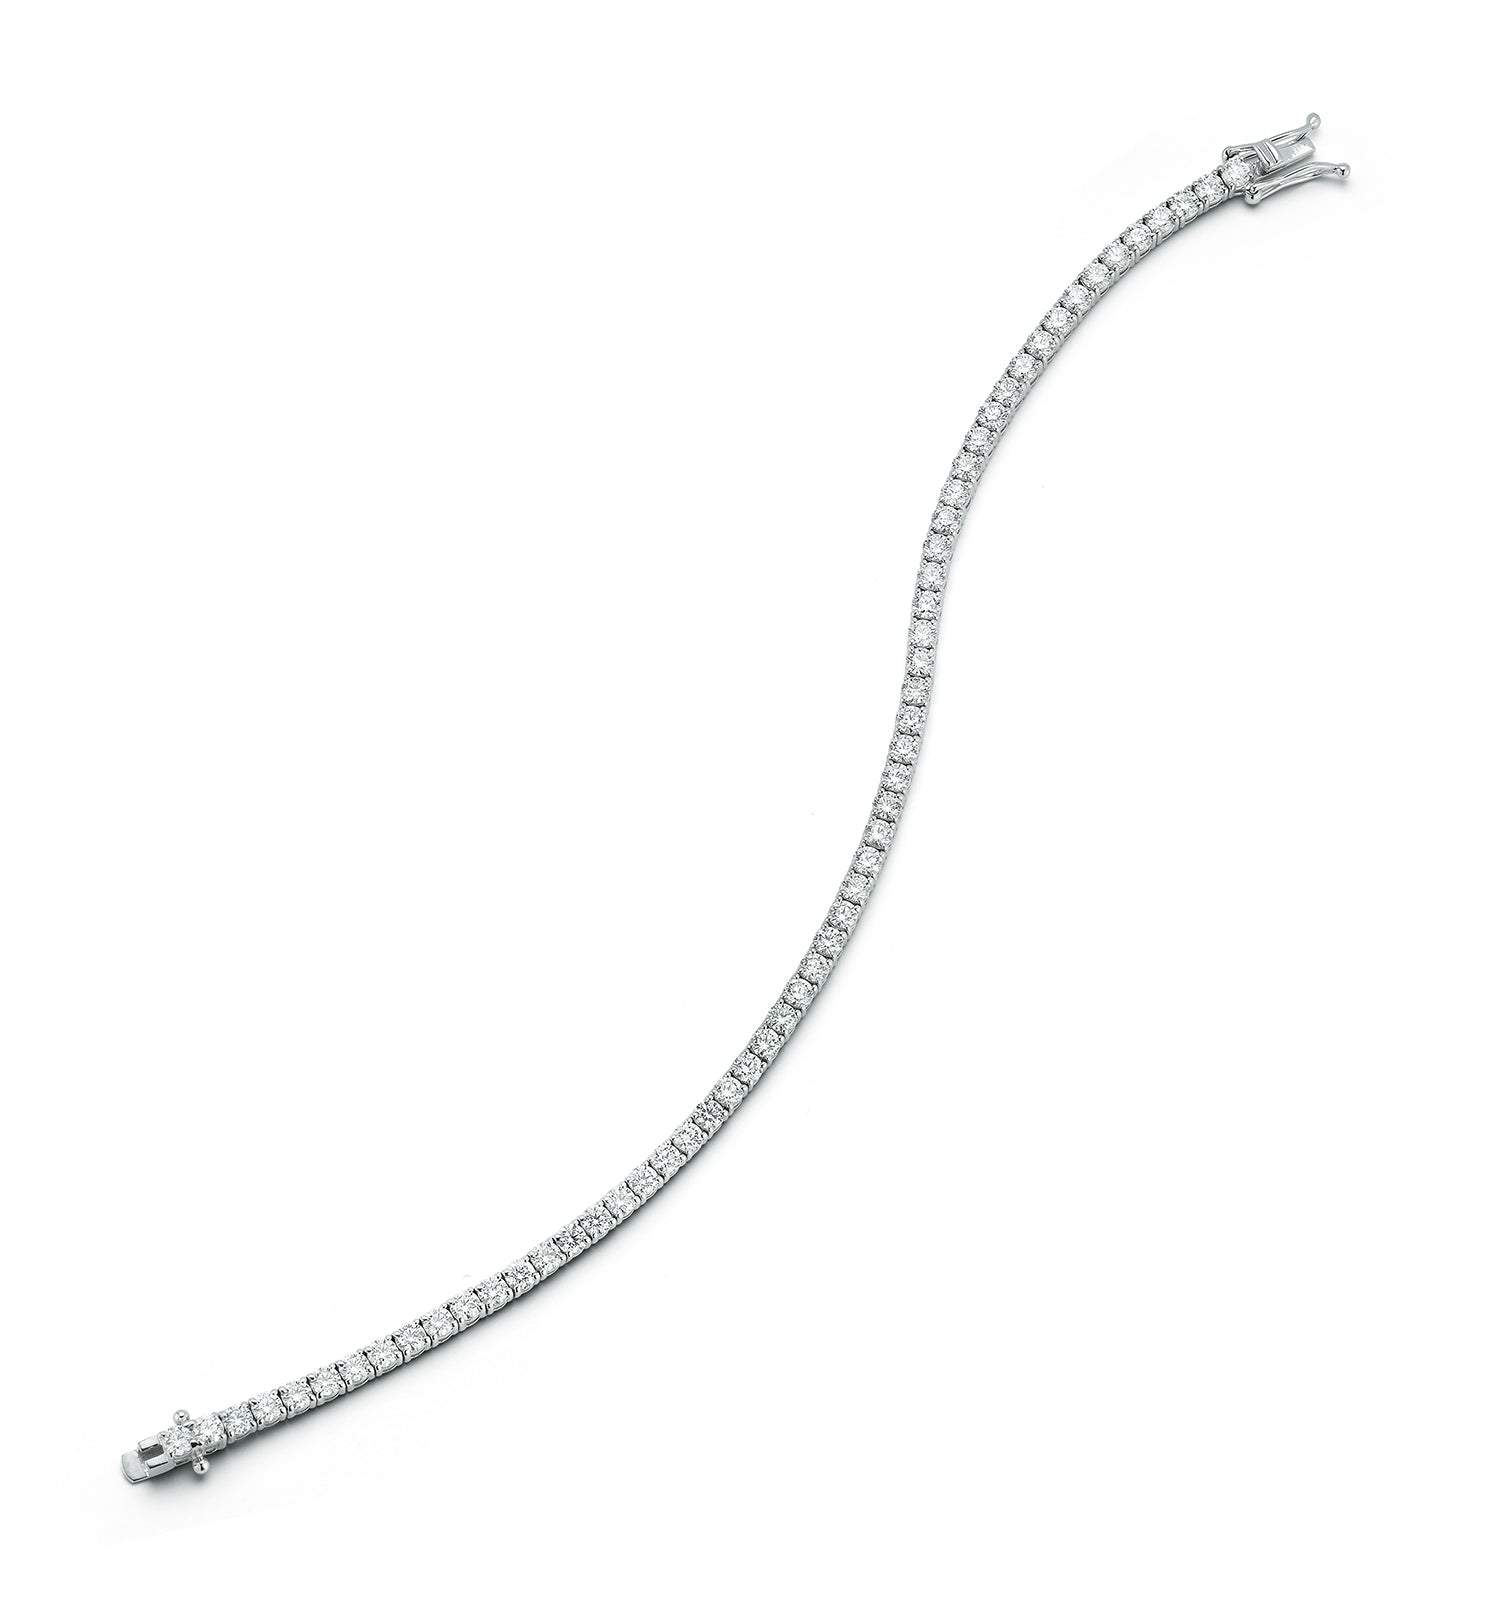 Diamond Tennis Bracelet in 18k white gold with 5 carat diamonds